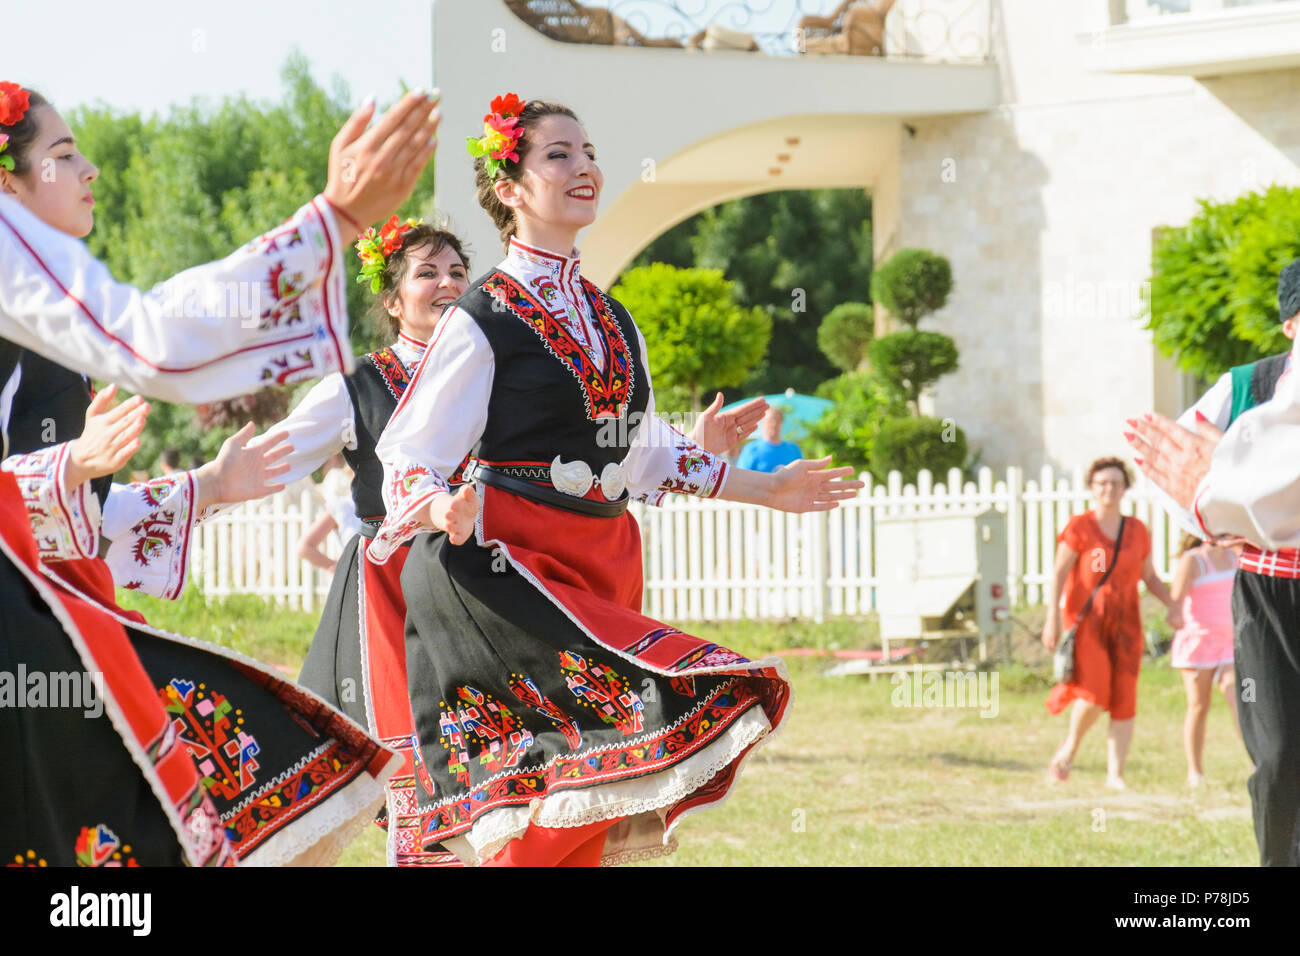 File:Turkish folk dancer with traditional costume.jpg - Wikipedia